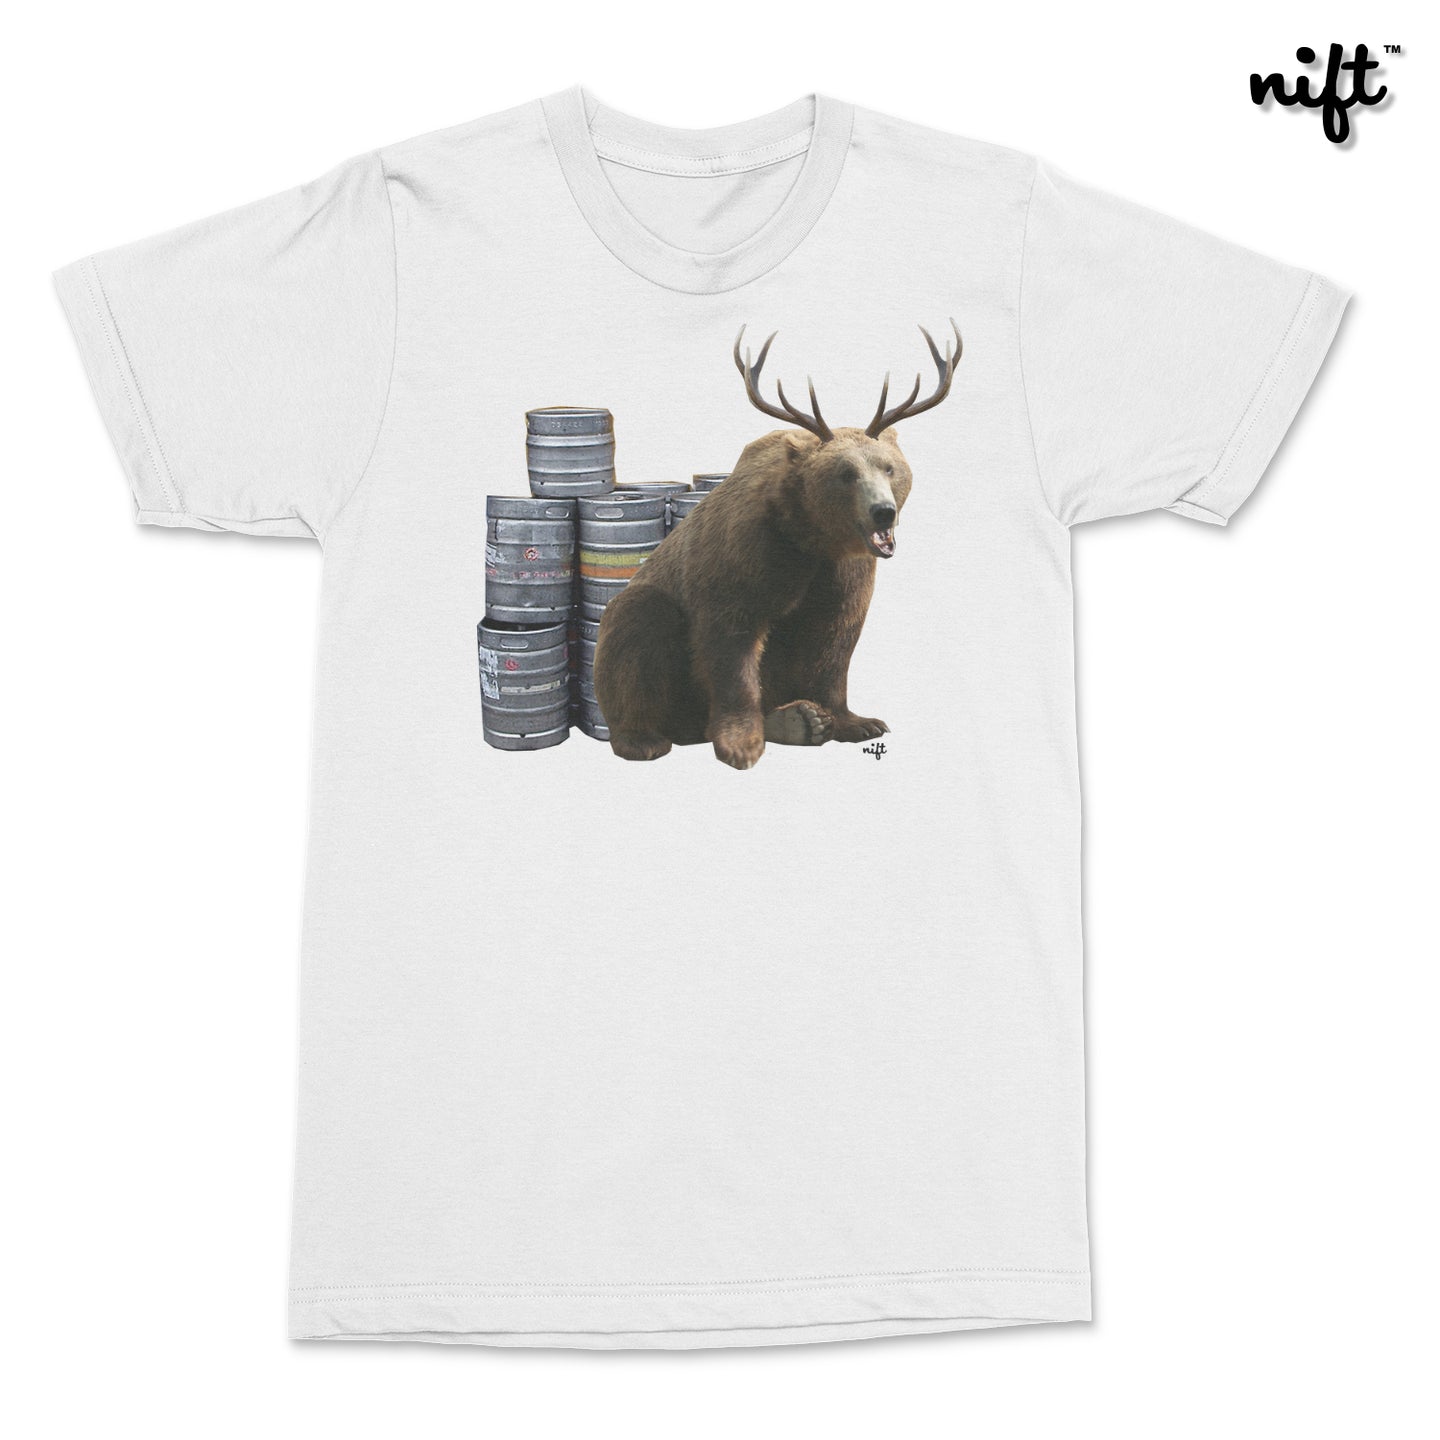 Party Bear T-shirt